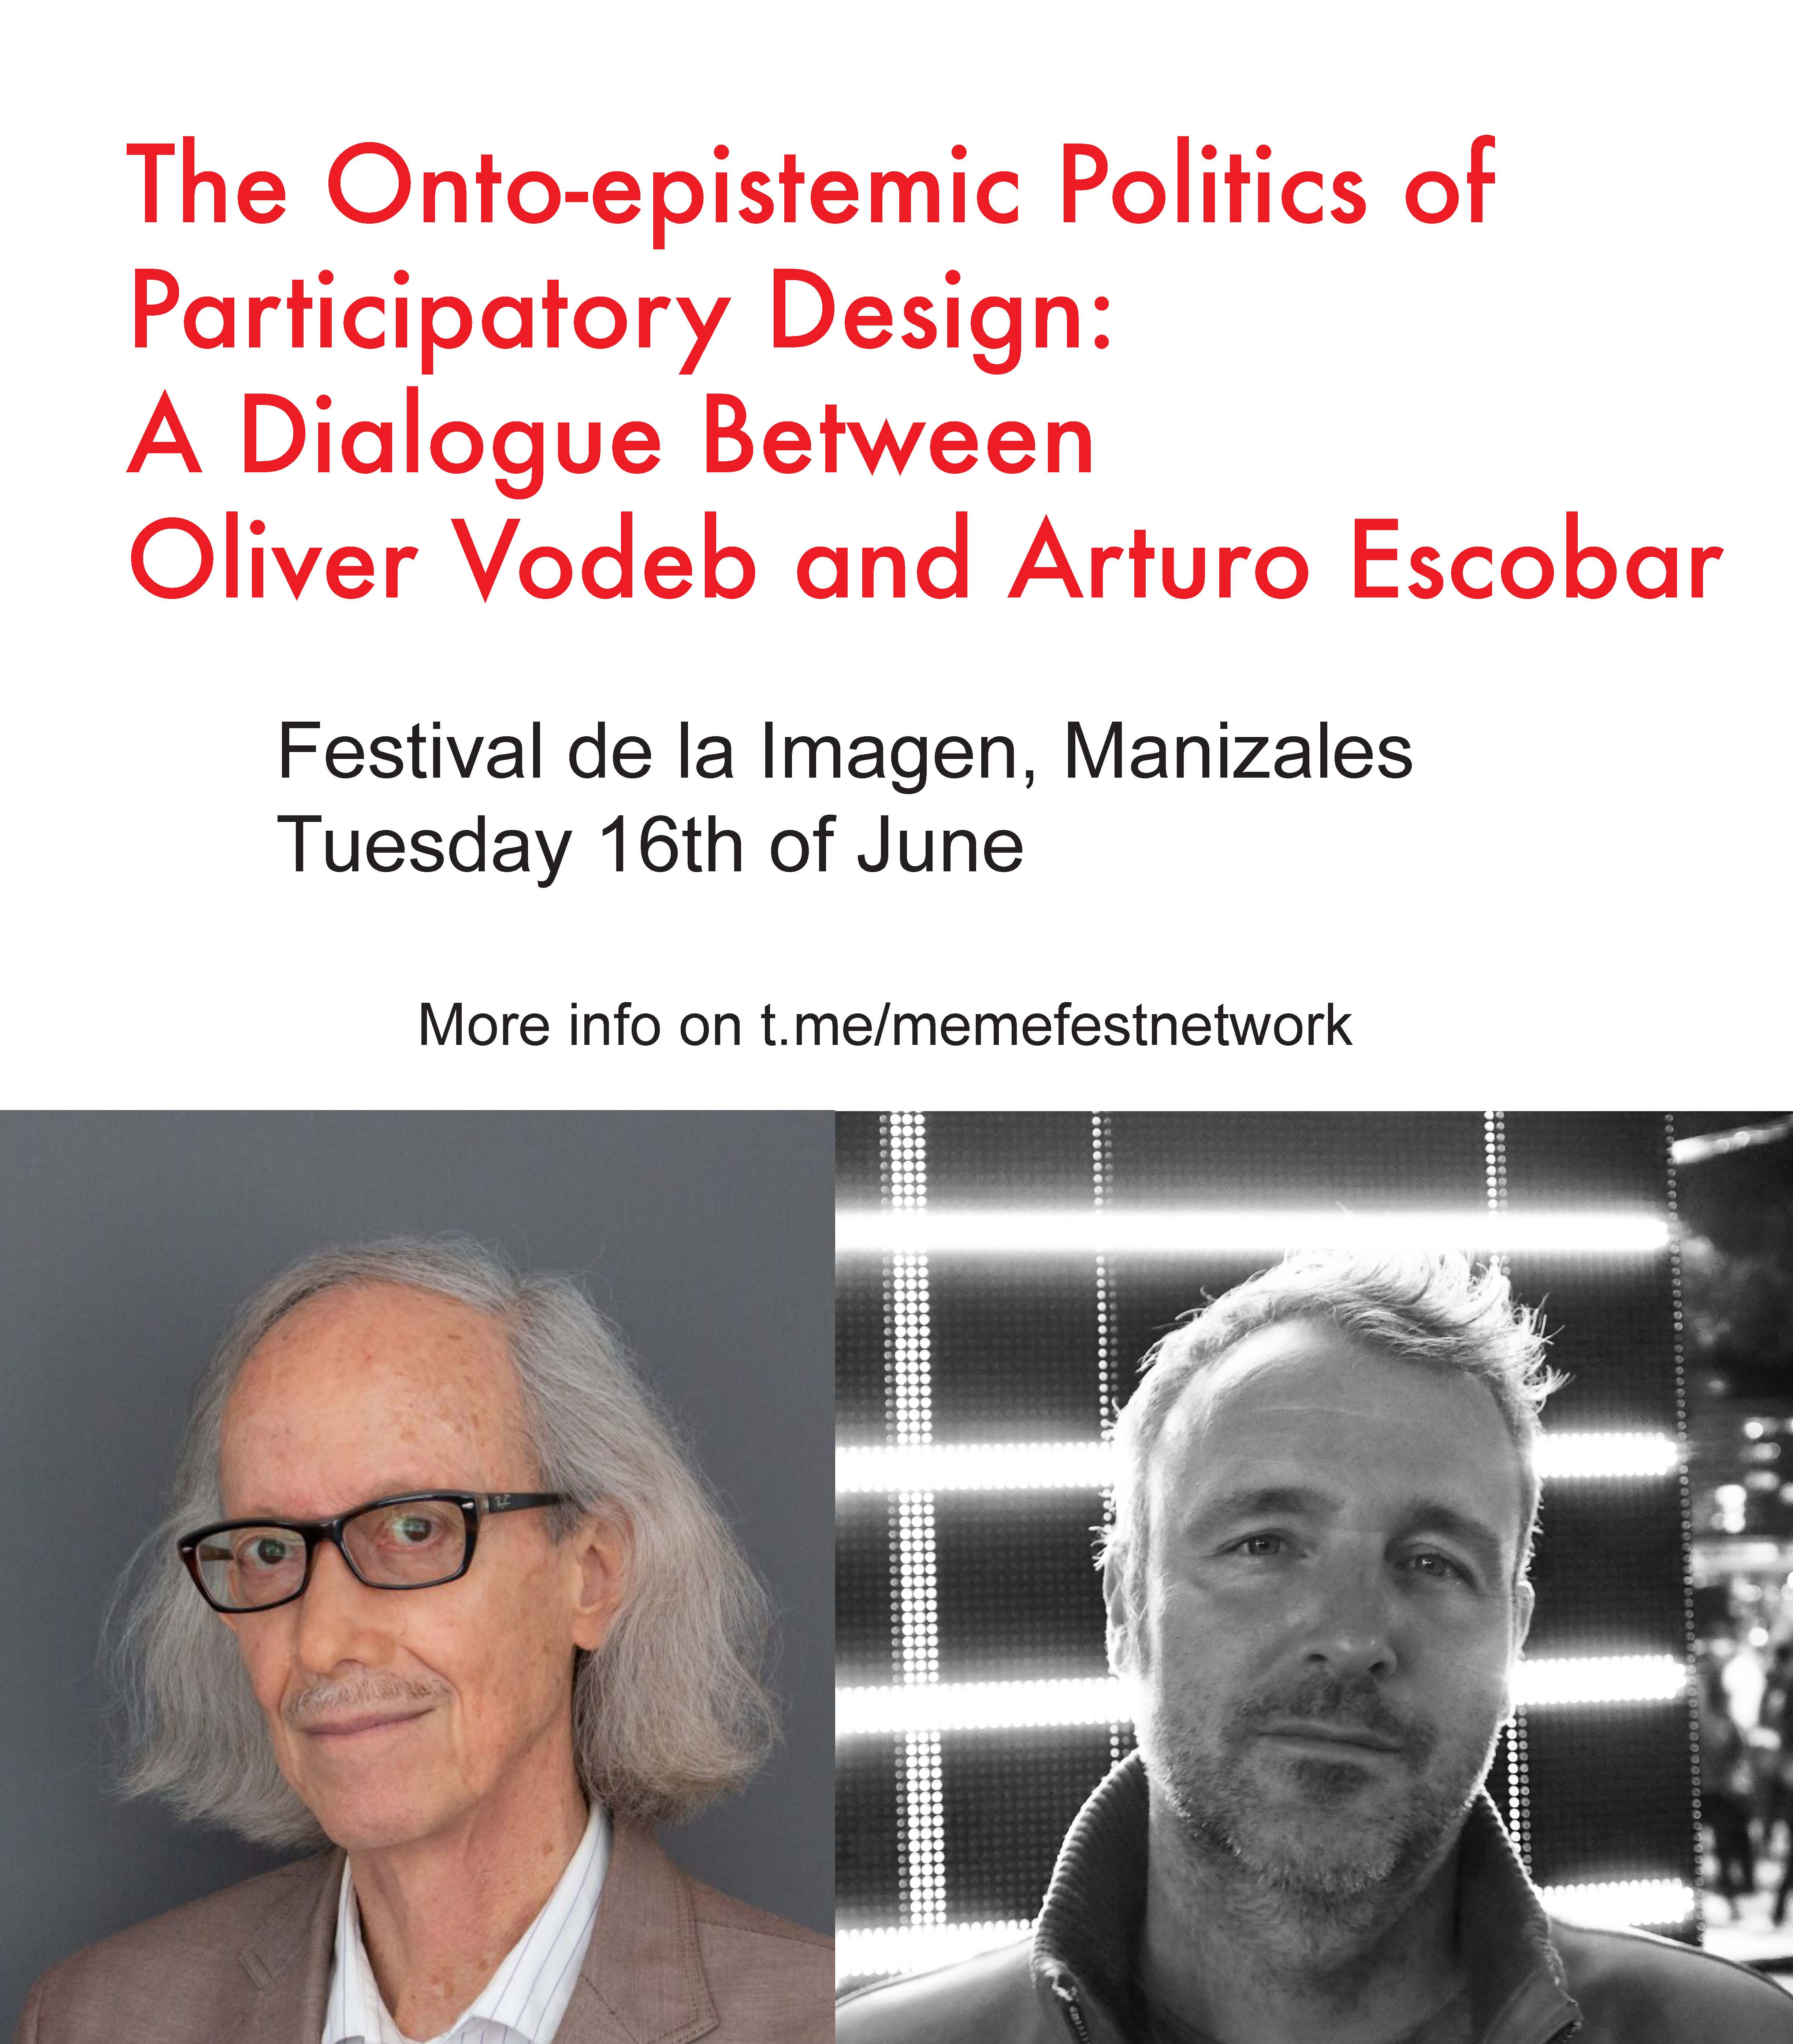 Oliver Vodeb and Arturo Escobar in Dialogue